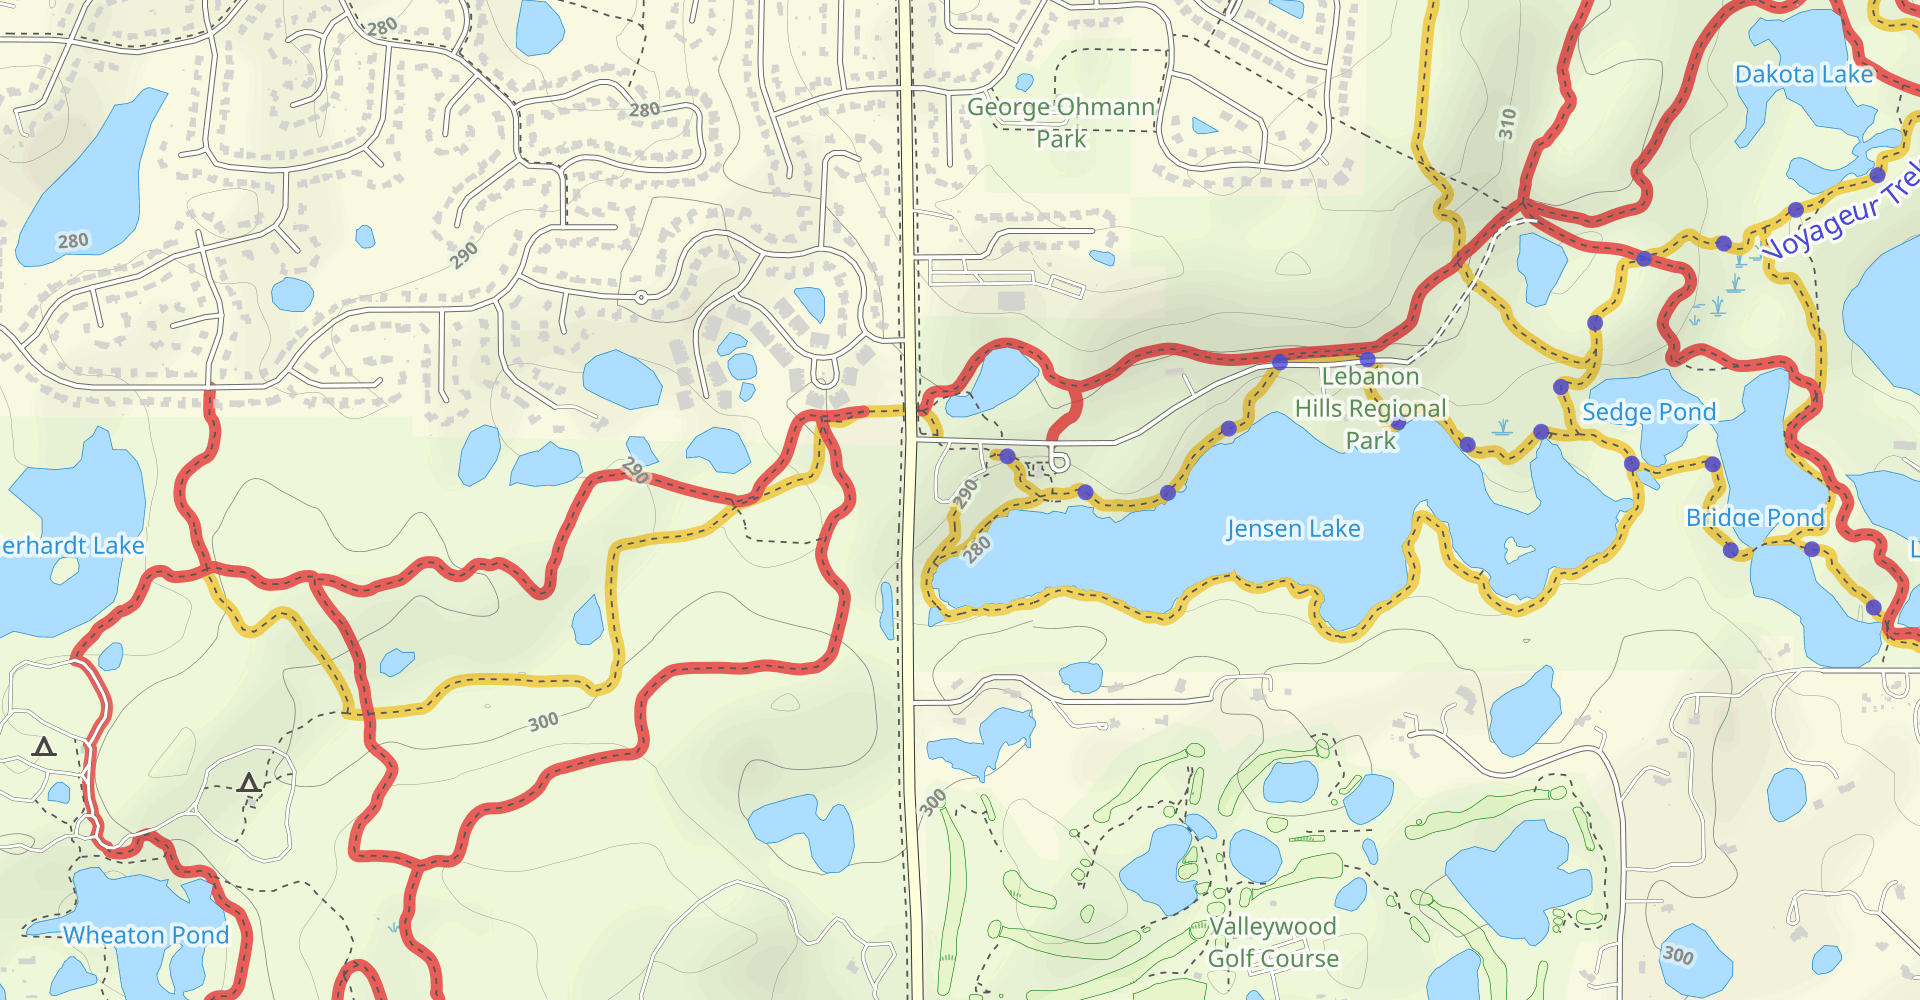 Jensen Lake, Sedge Pond and Bridge Pond Loop